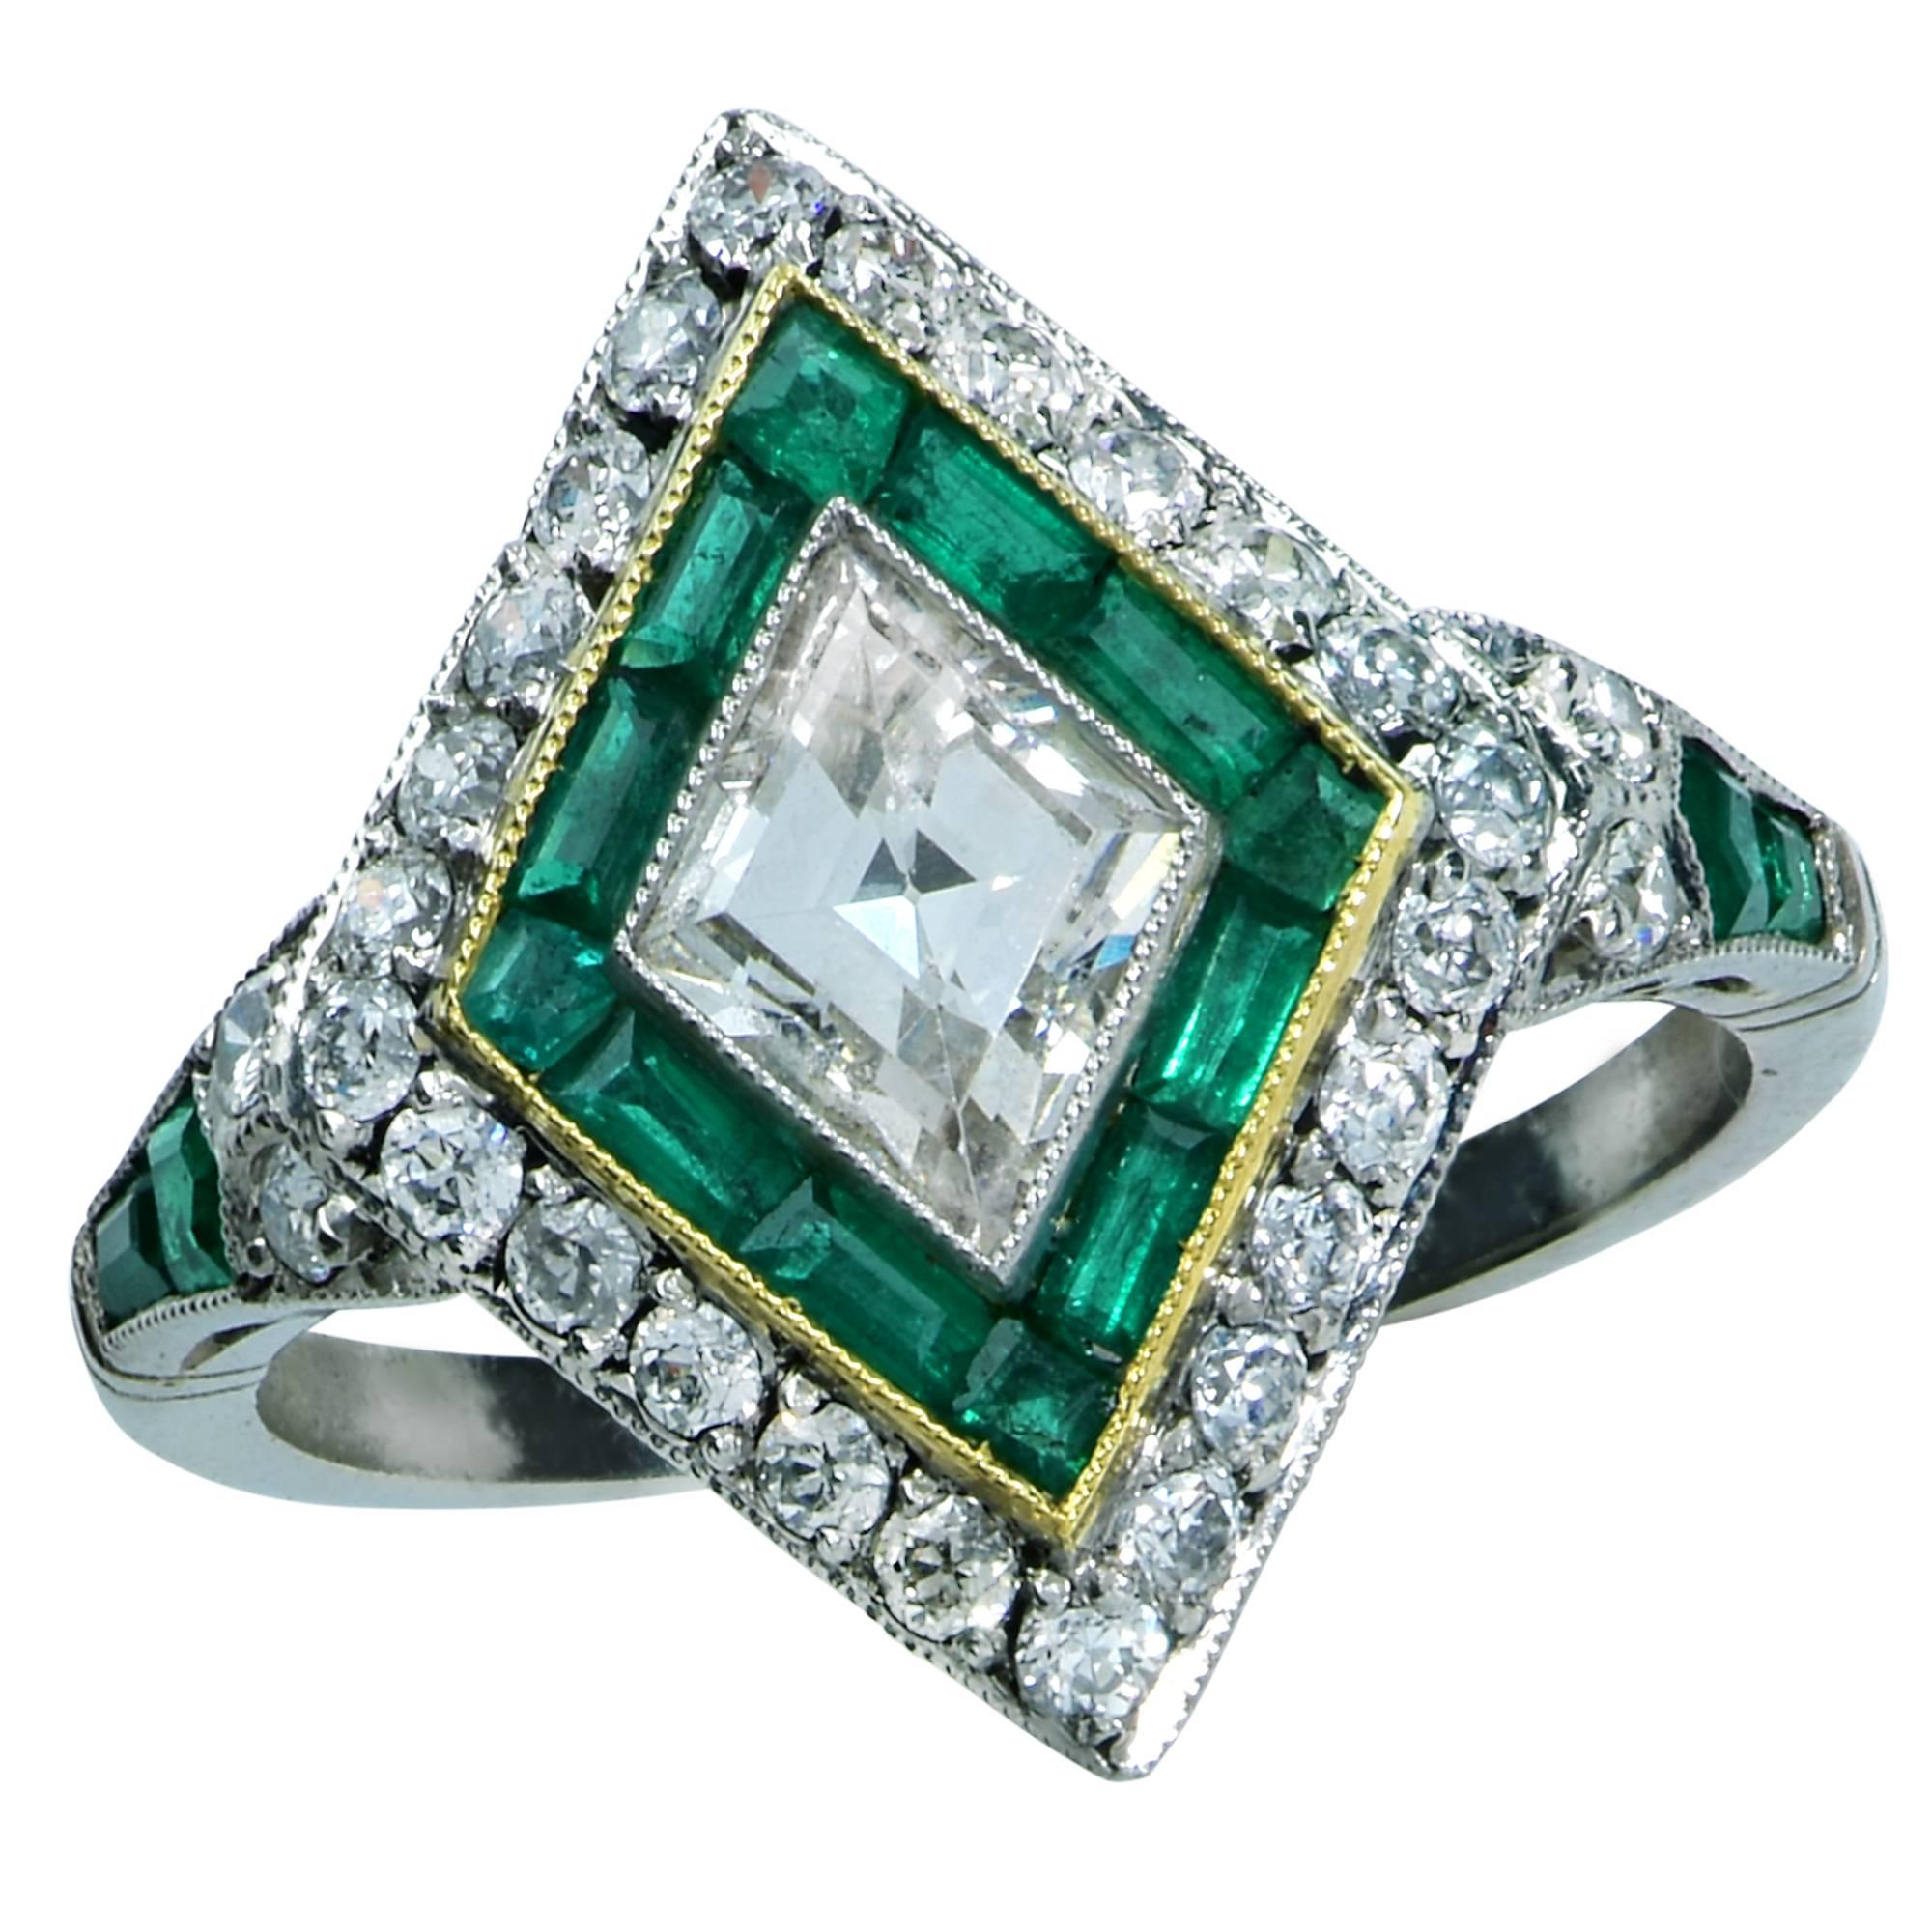 Modern Art Deco Style 1.35 Carat Diamond and Emerald Ring